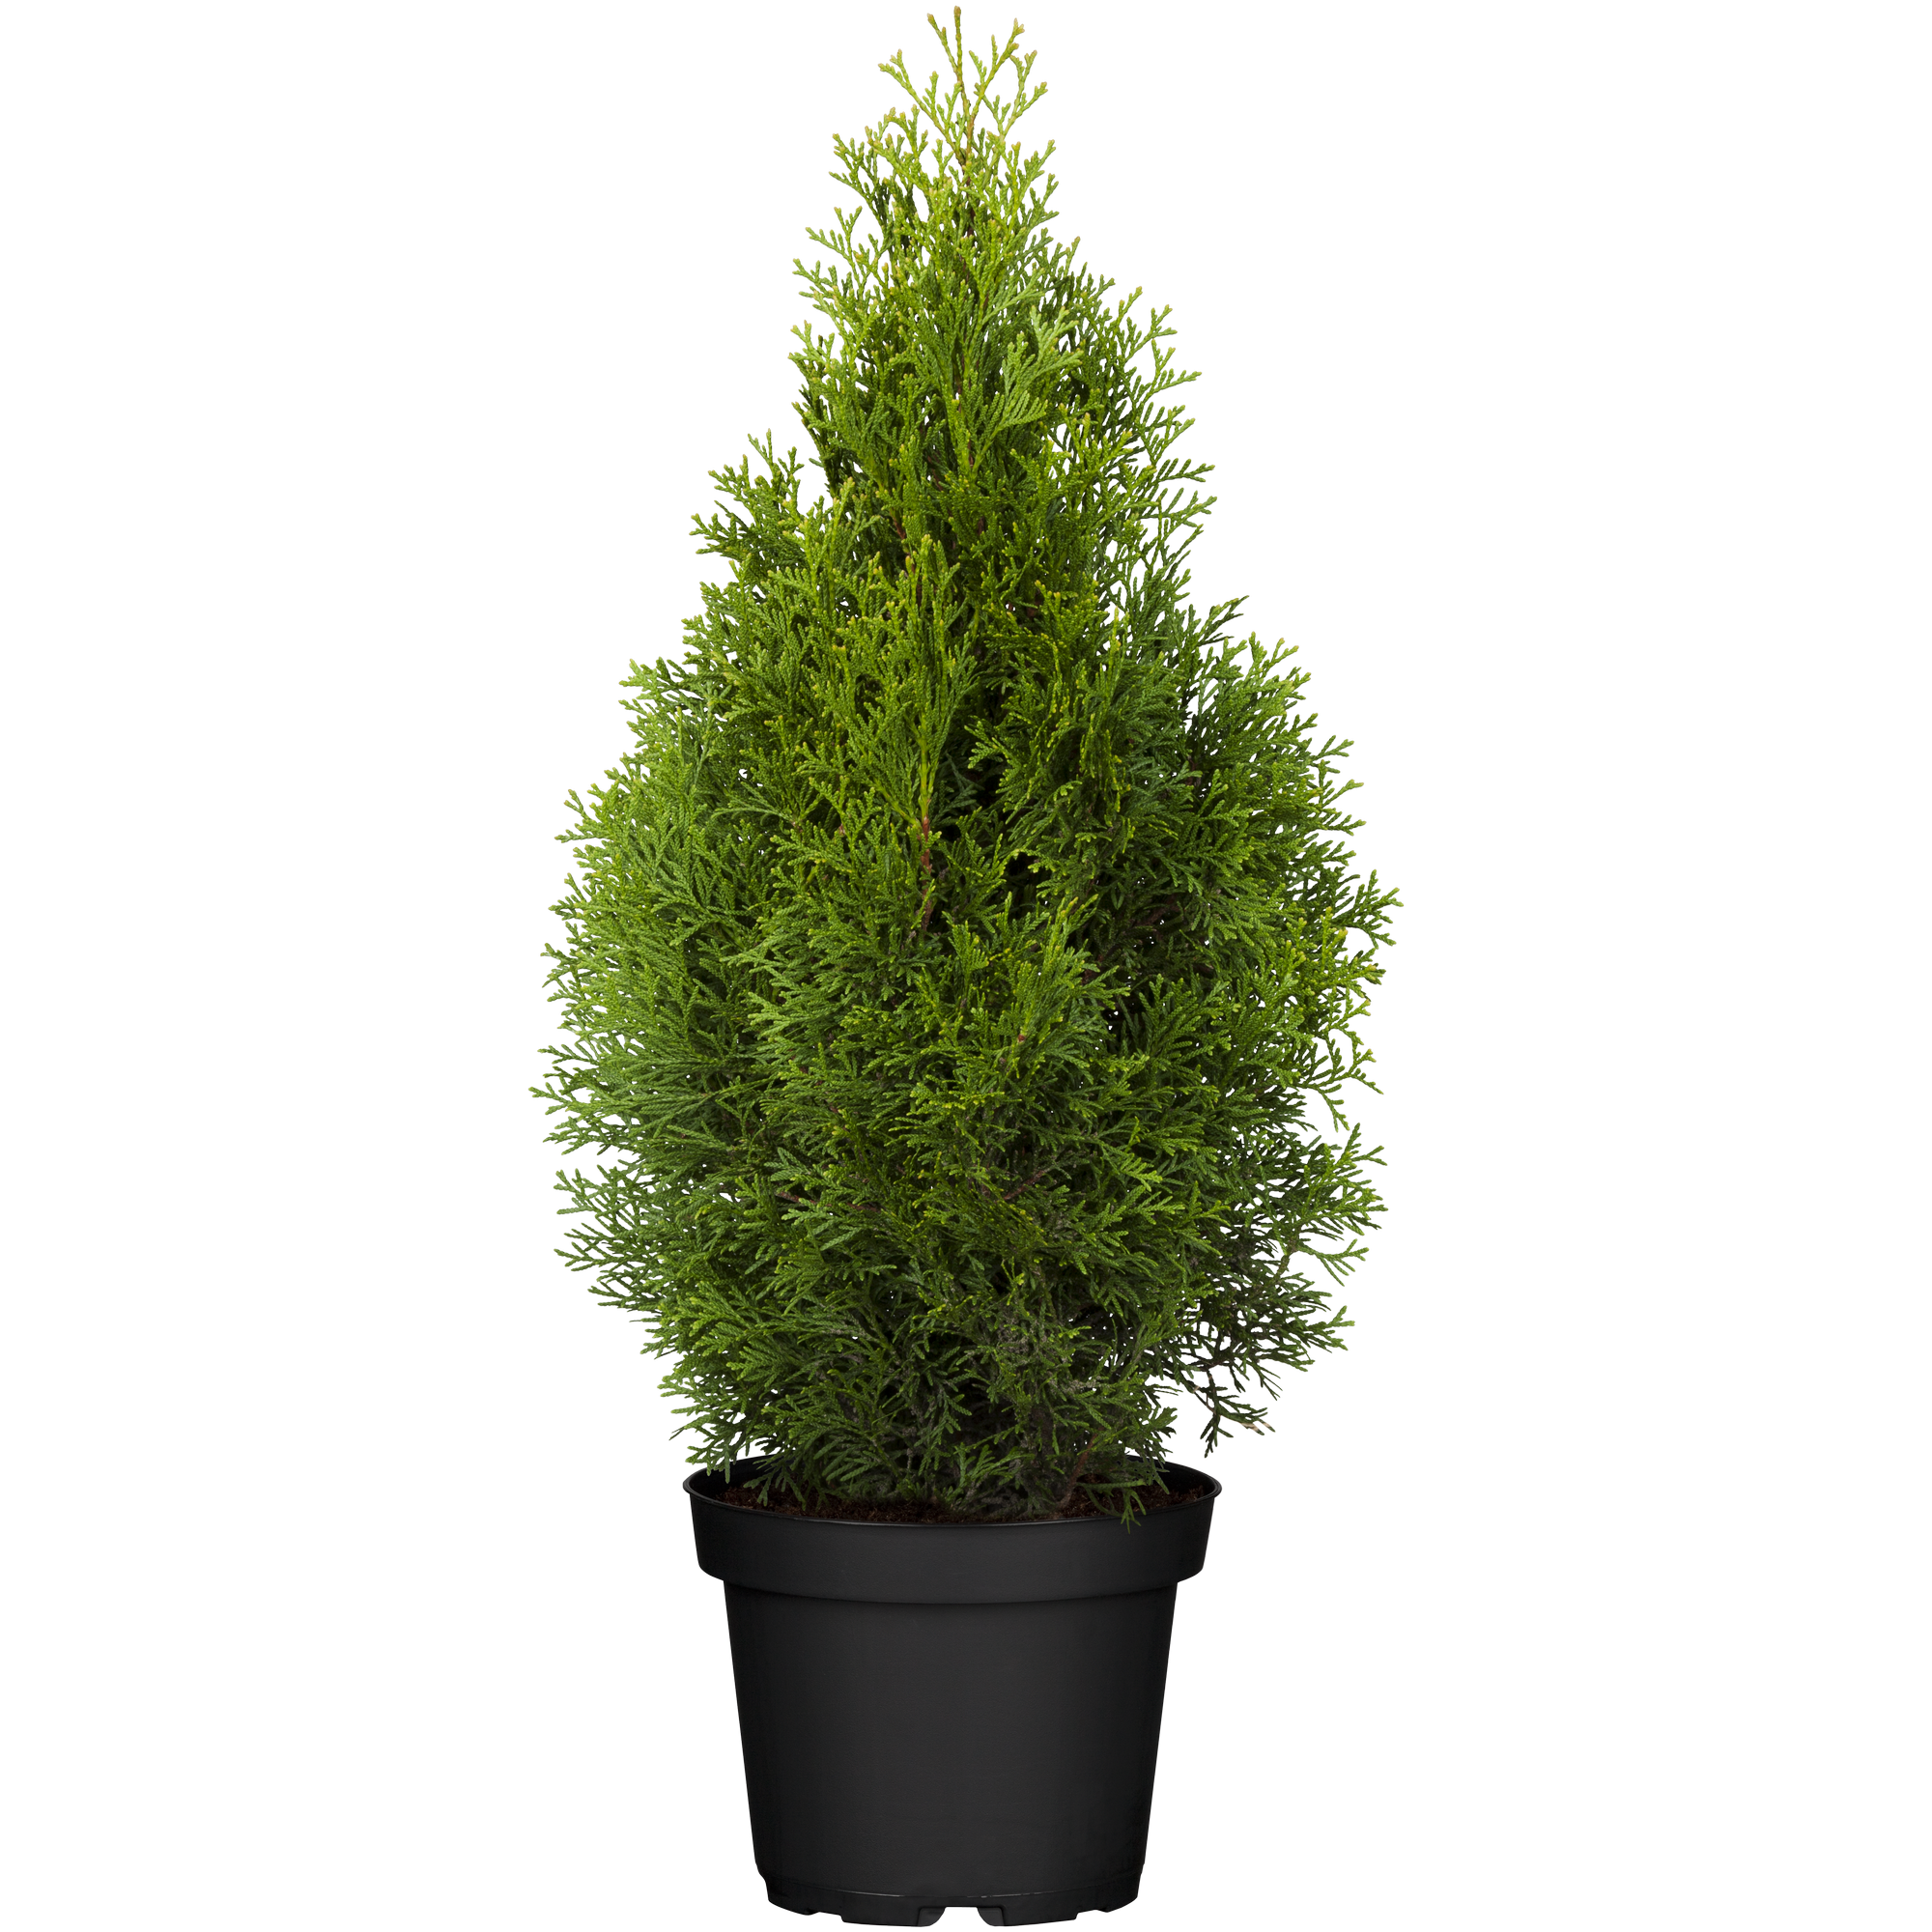 Lebensbaum 'Smaragd', 70-80 cm, 29 cm Topf + product picture